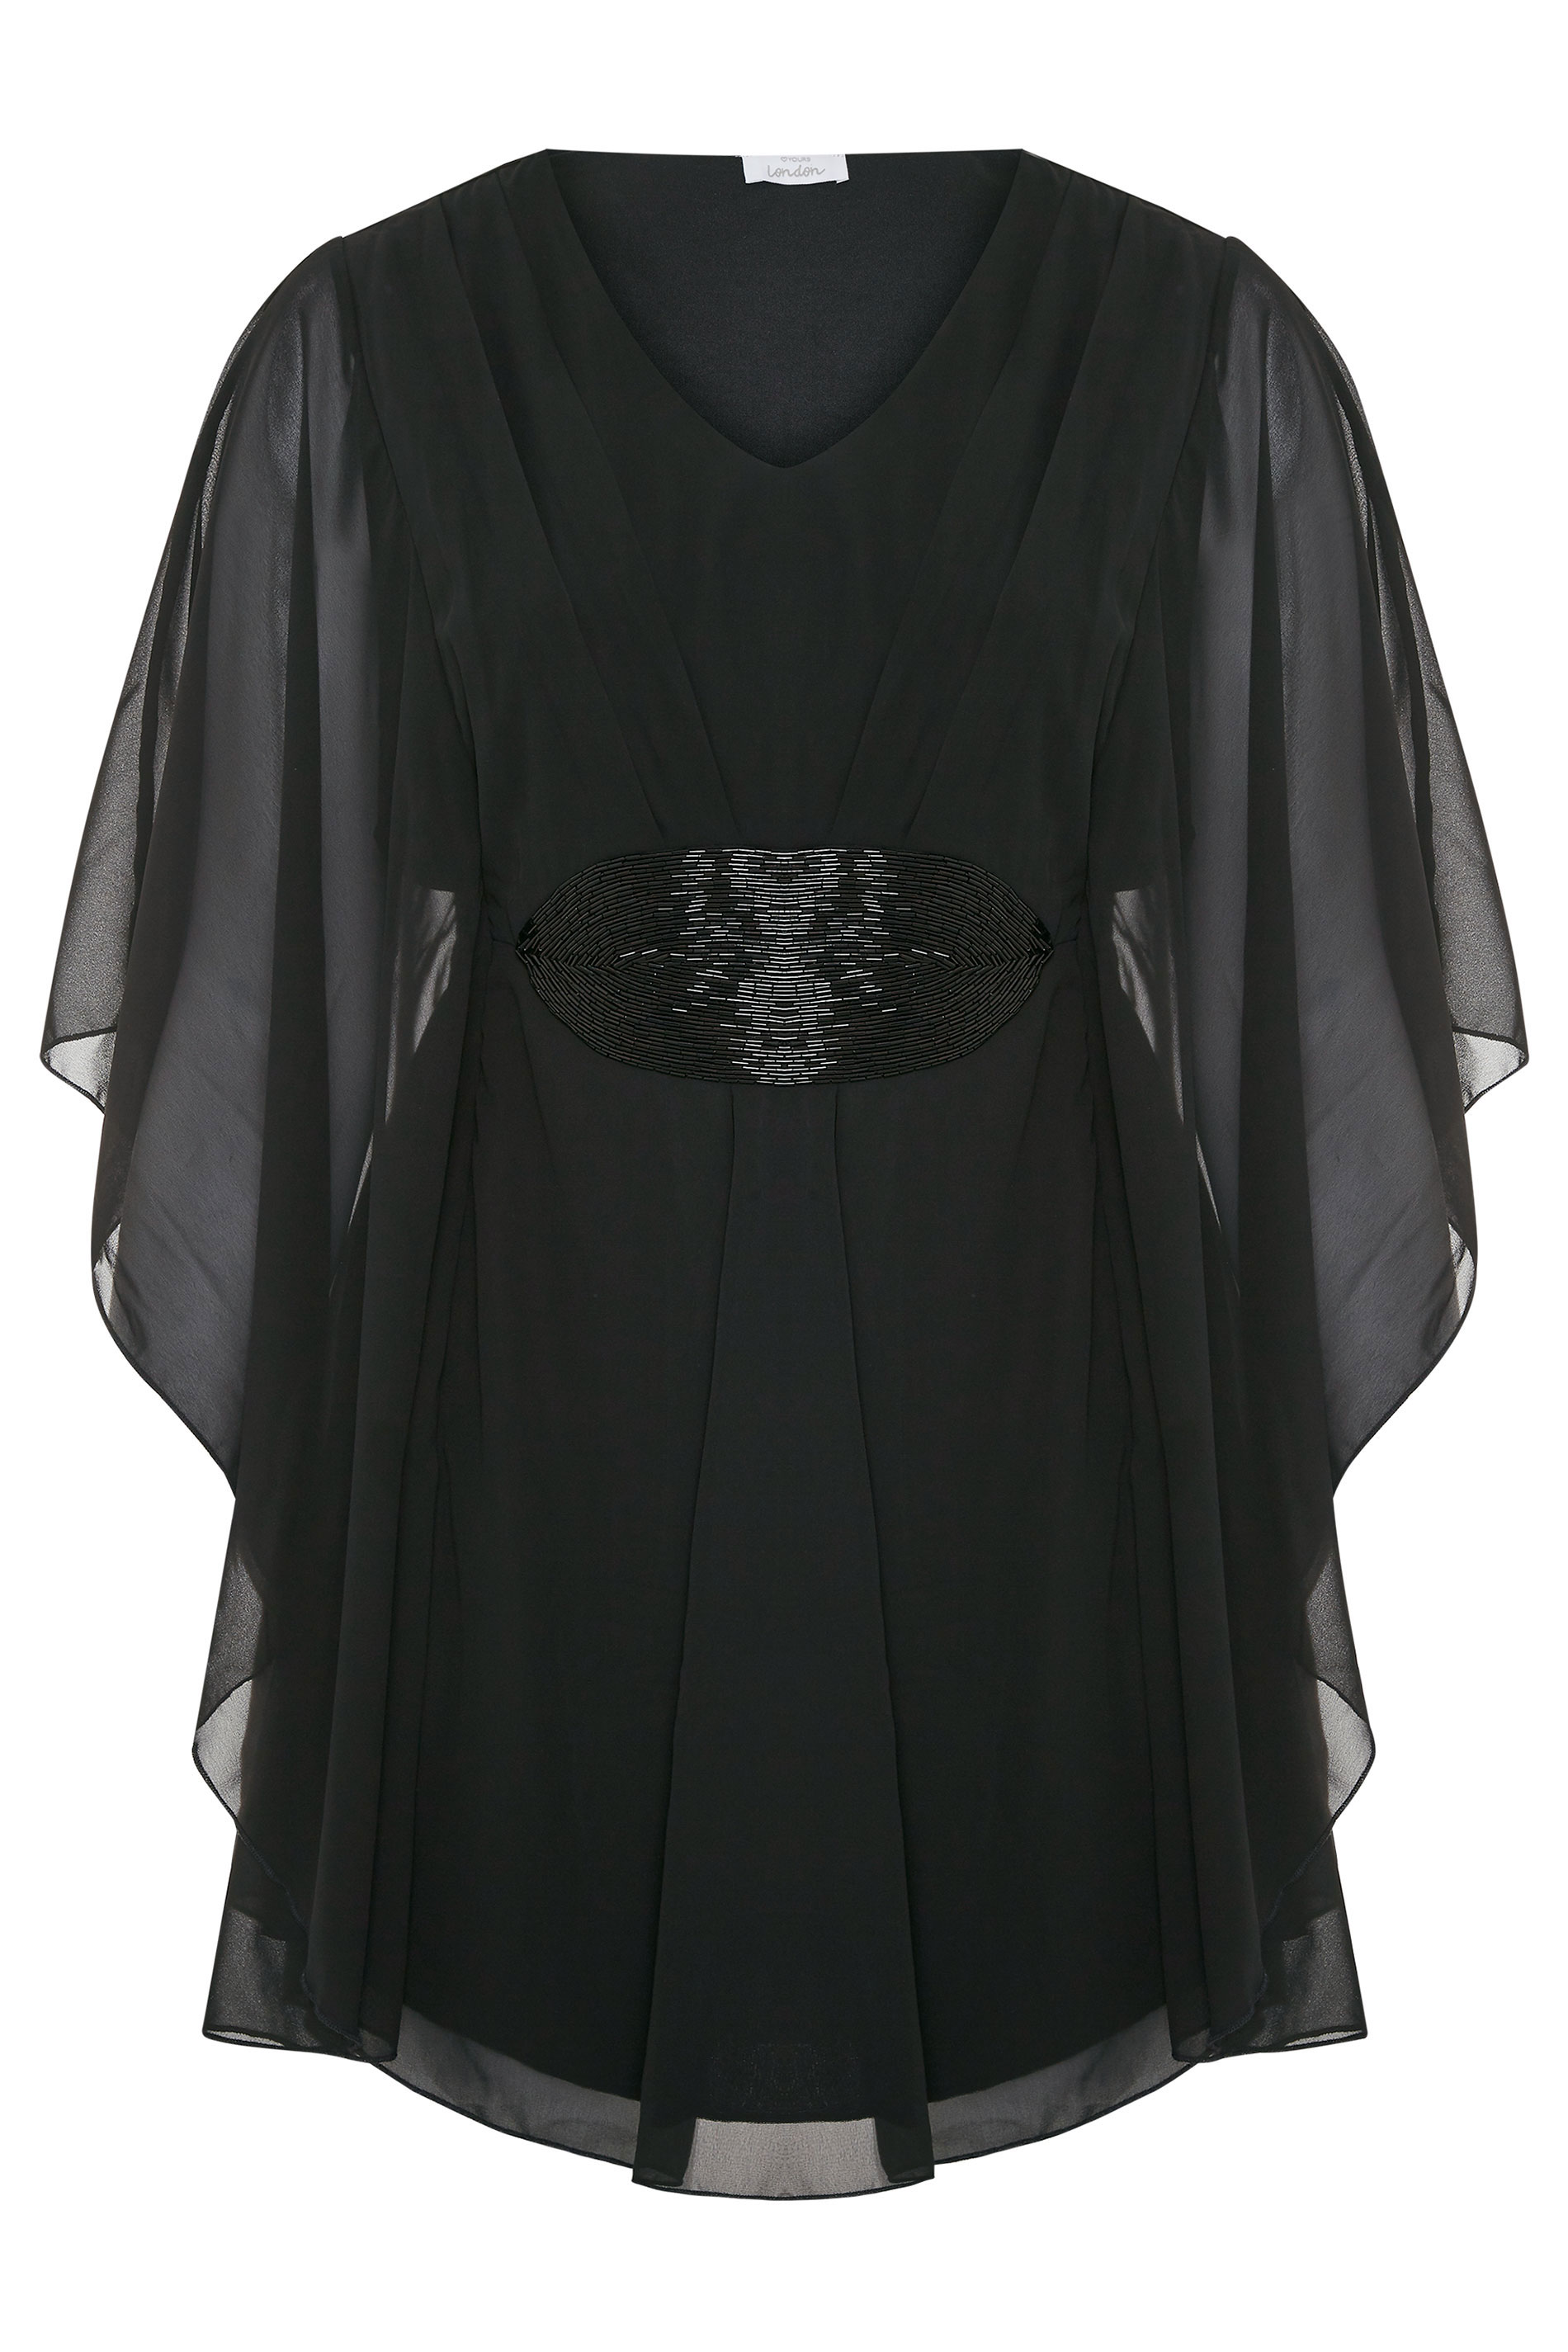 YOURS LONDON Black Sequin Waist Chiffon Tunic | Yours Clothing